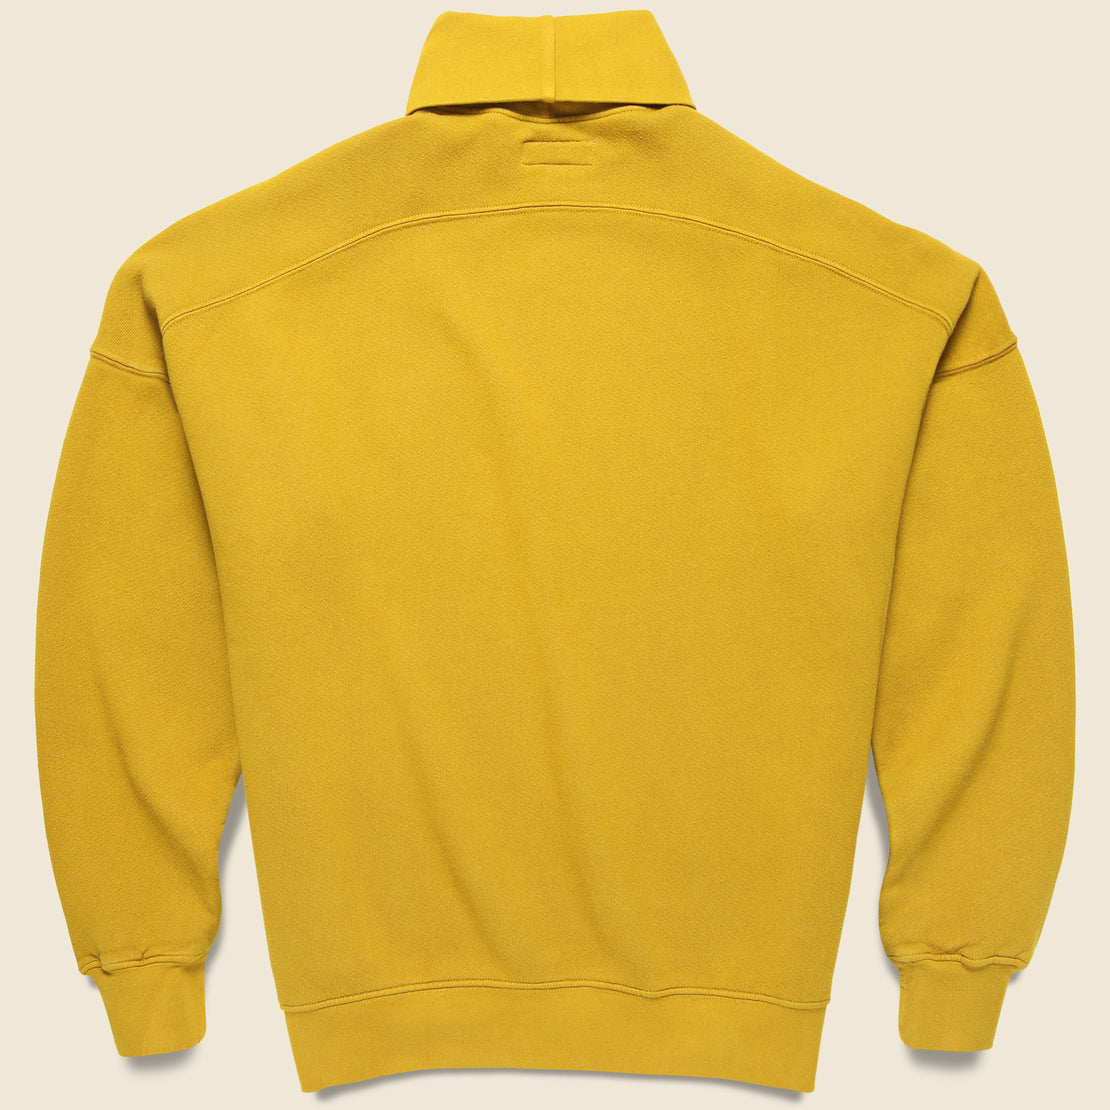 Super Russell Turtleneck - Mustard - Monitaly - STAG Provisions - Tops - Fleece / Sweatshirt